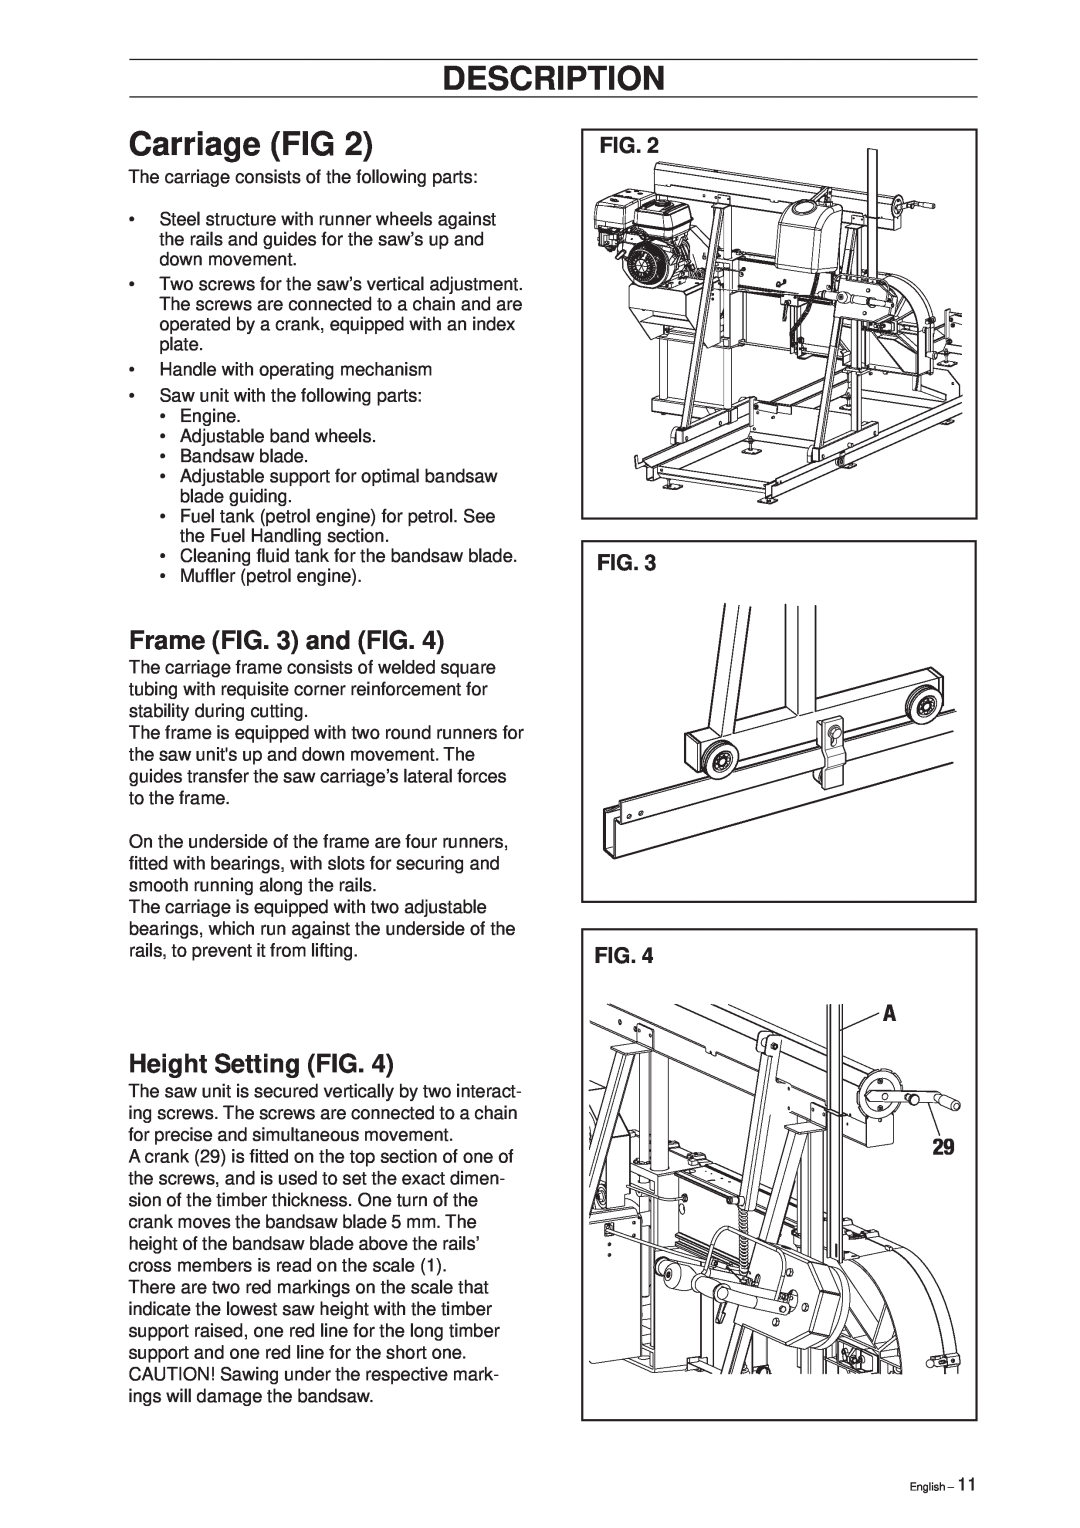 Husqvarna SMB 70, SMB 70 E manual Carriage FIG, Frame and FIG, Height Setting FIG, Description 